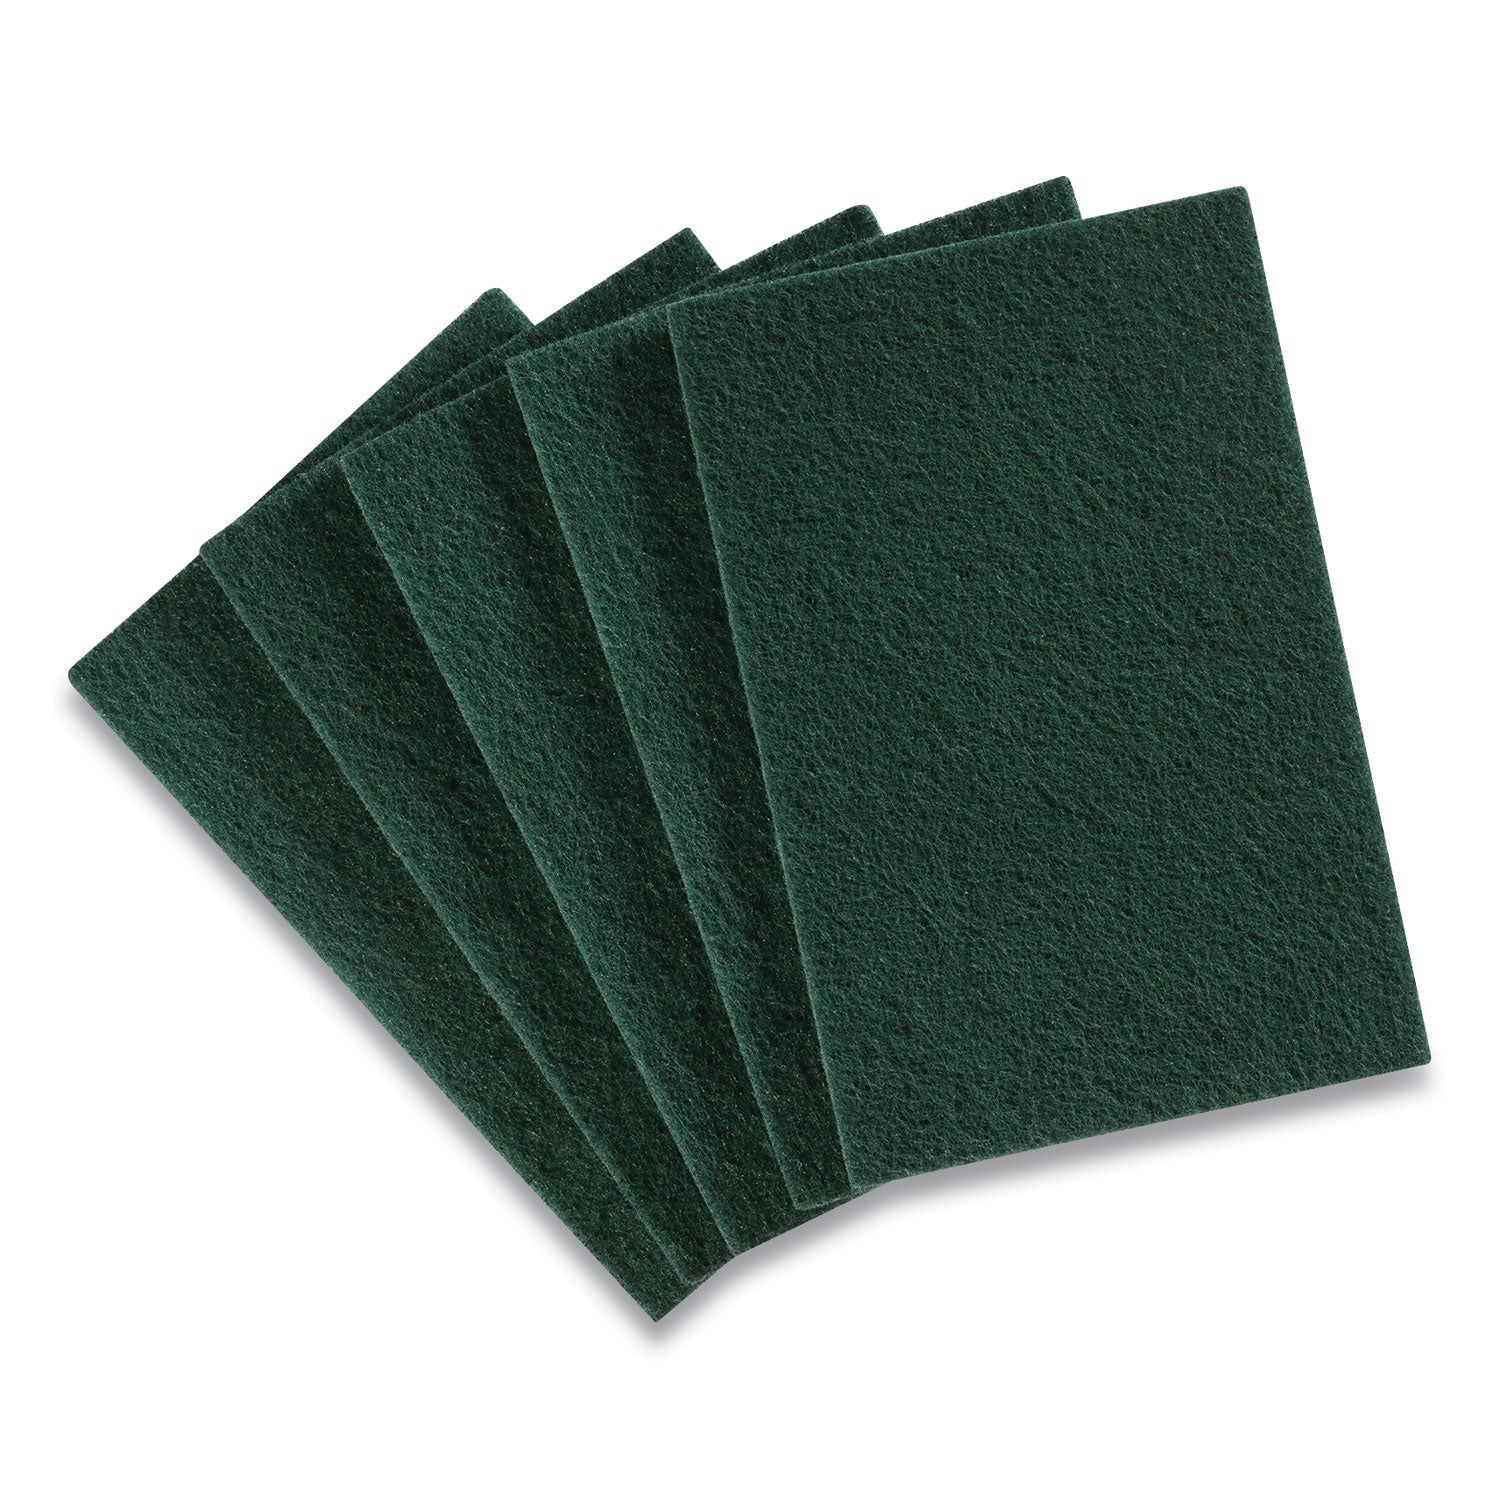 medium-duty-scouring-pads-green-10-pack_cwz24418463 - 1